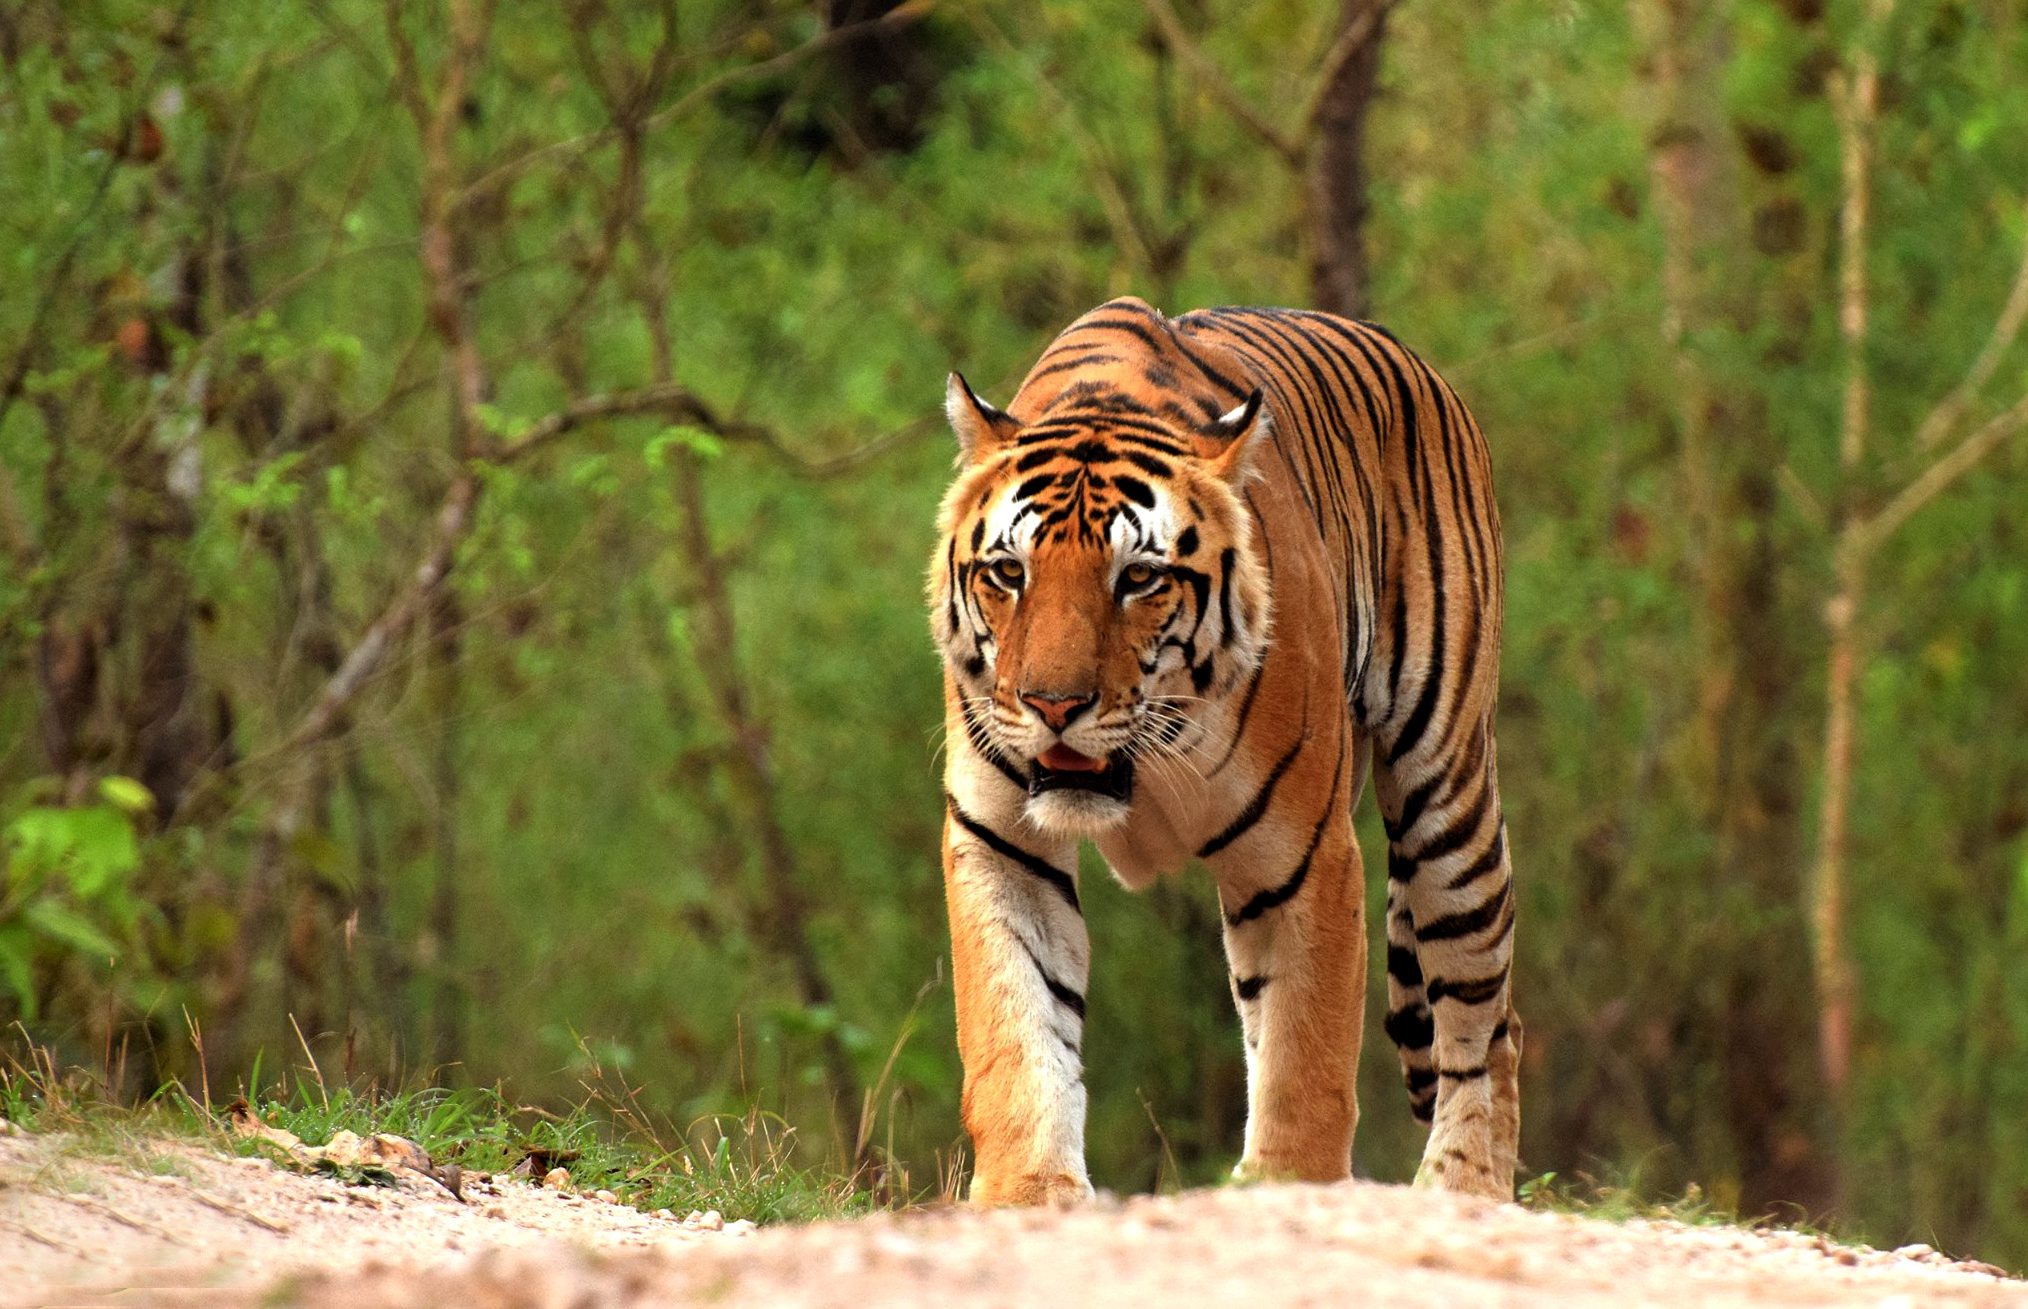 Tigers of Kanha National Park